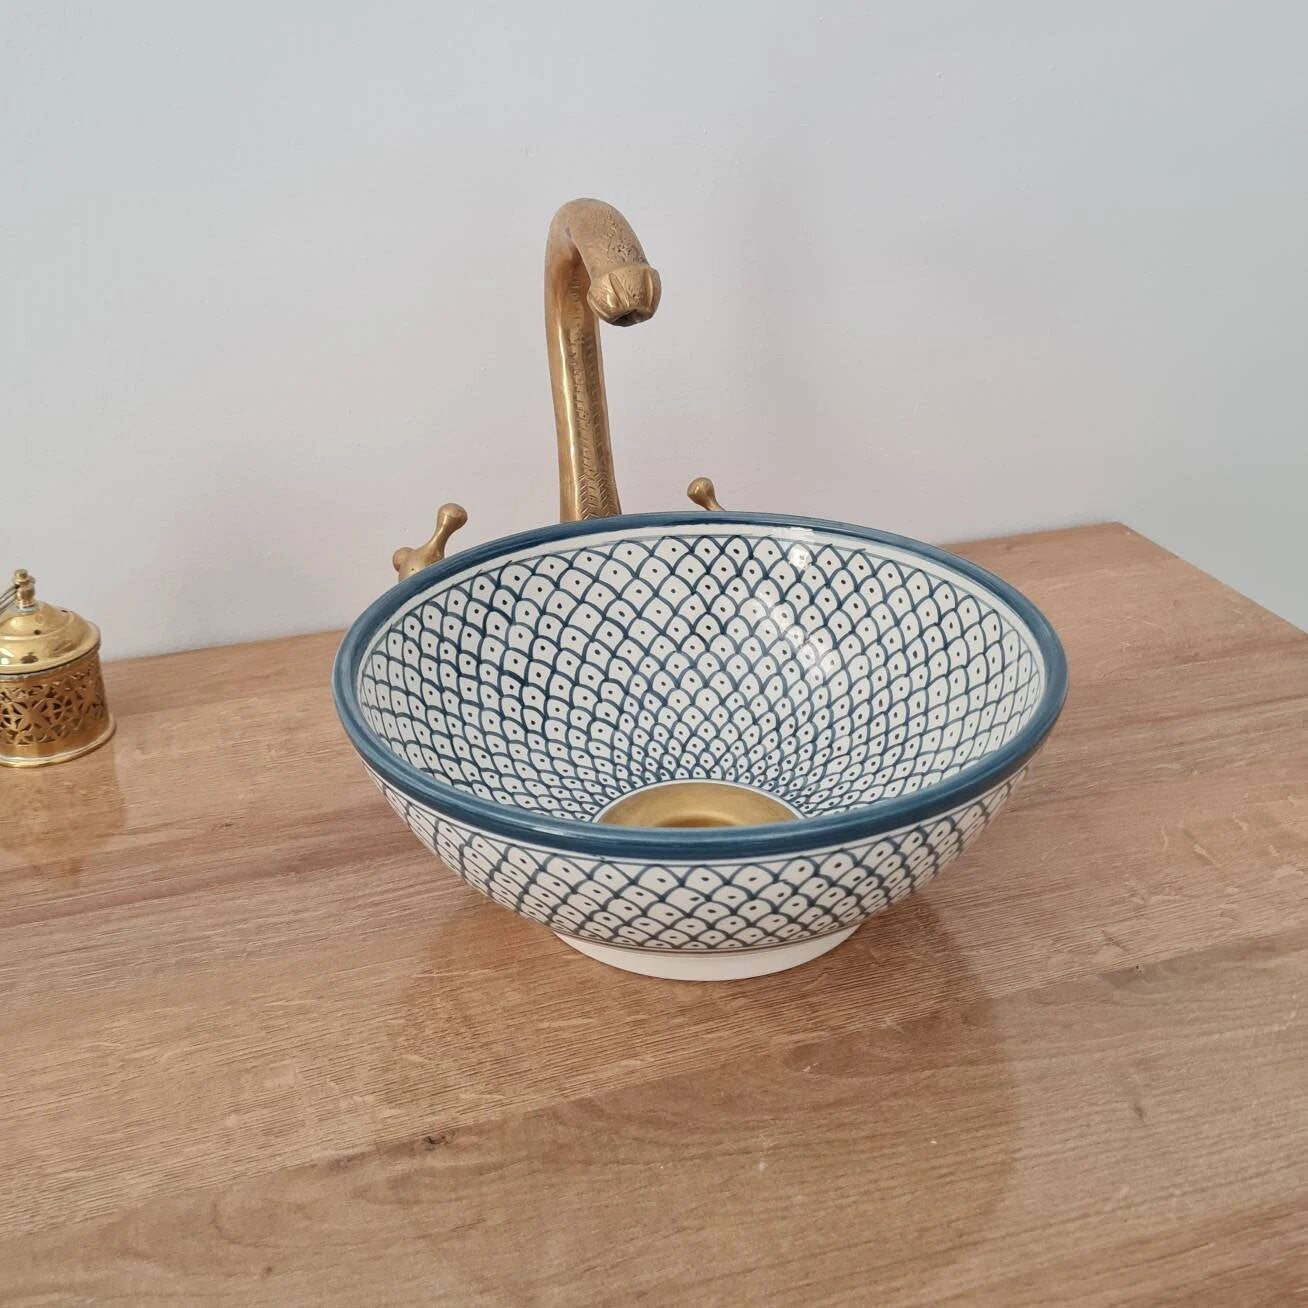 Vasque marocaine de salle de bain | Lavabo marocain en céramique style zellige salle de bain - moroccan sink bowl #29